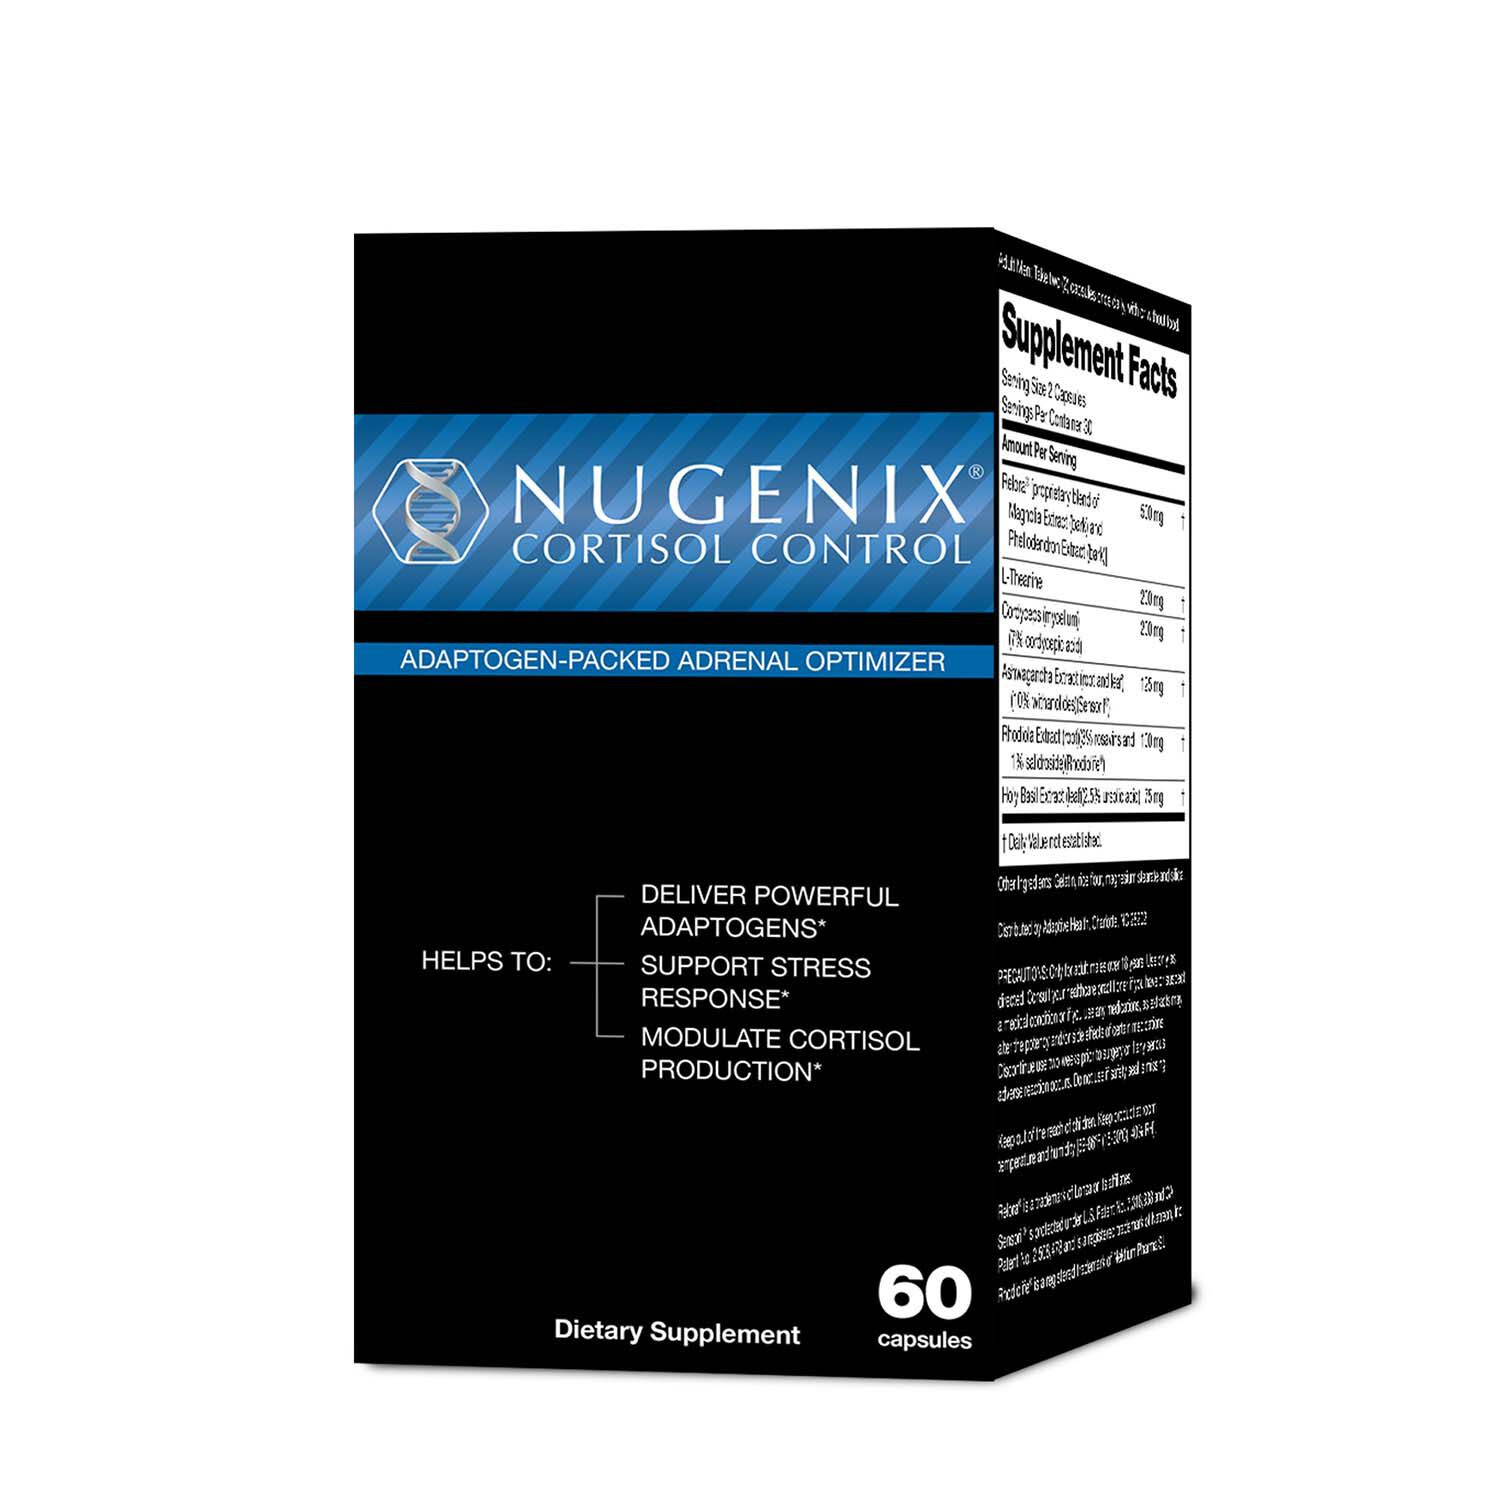 Nugenix Cortisol Control Box